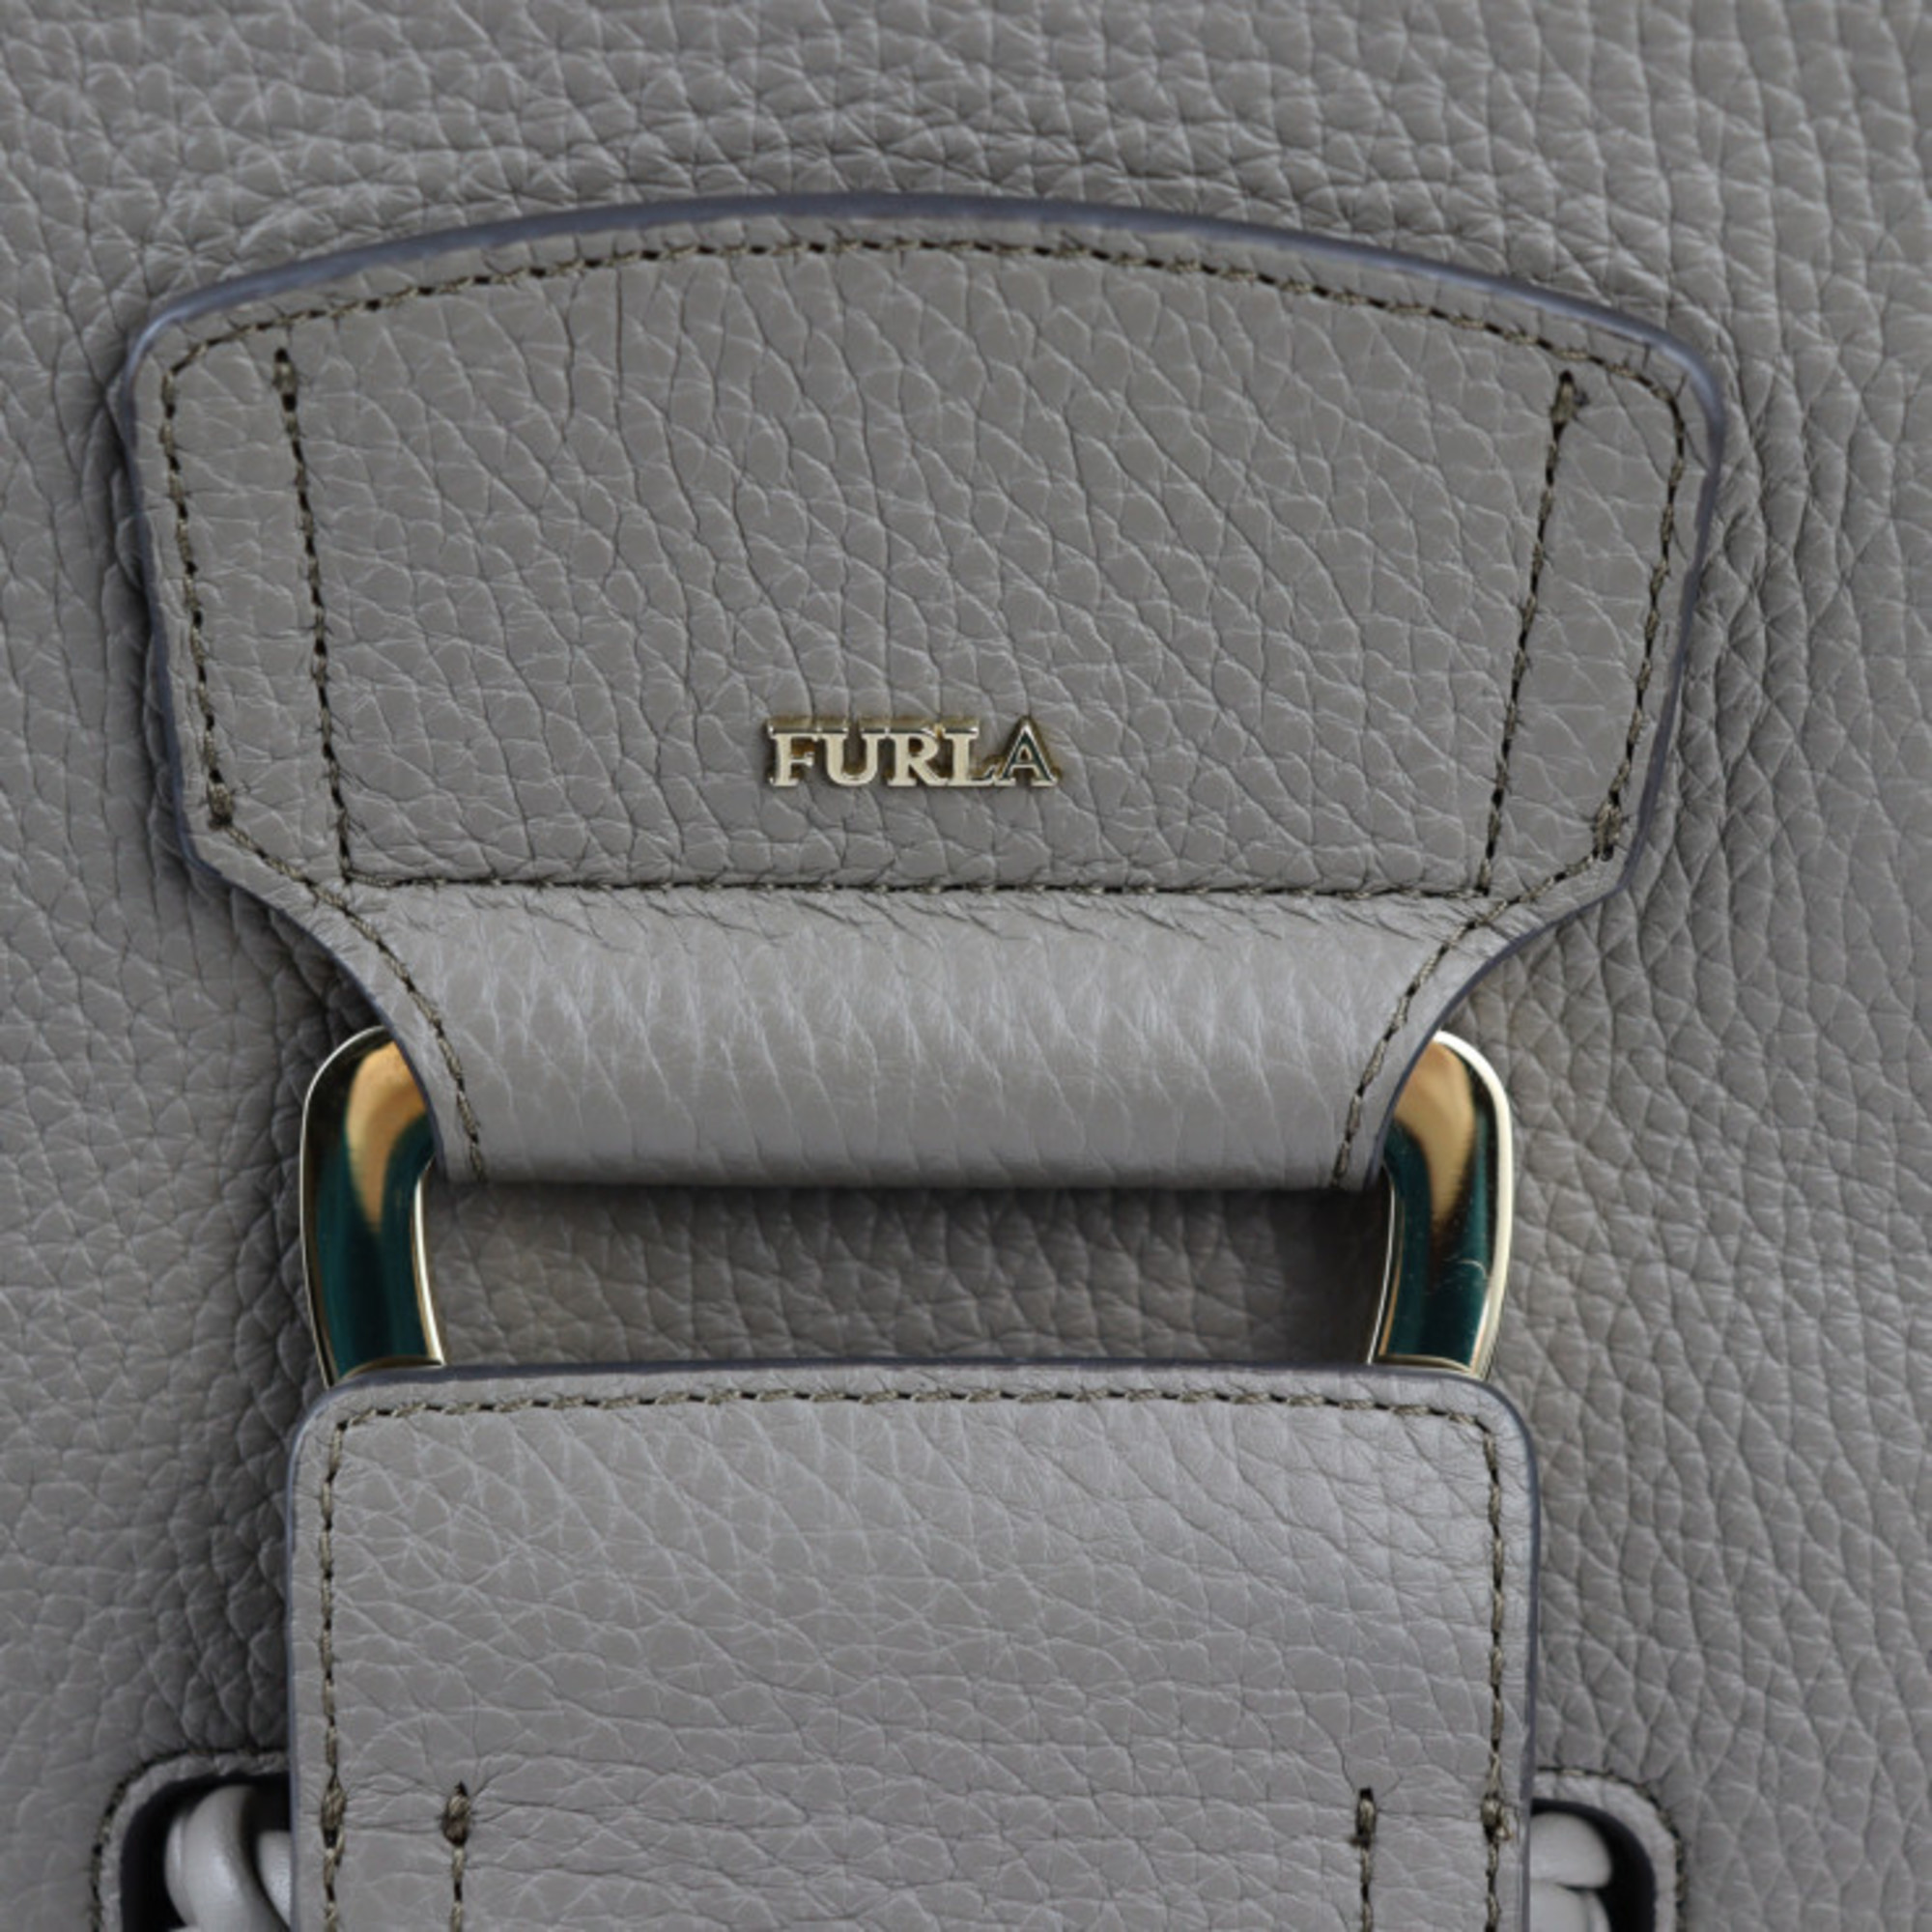 Furla Rialto S shoulder bag 942306 leather light gray gold metal fittings 2WAY handbag crossbody